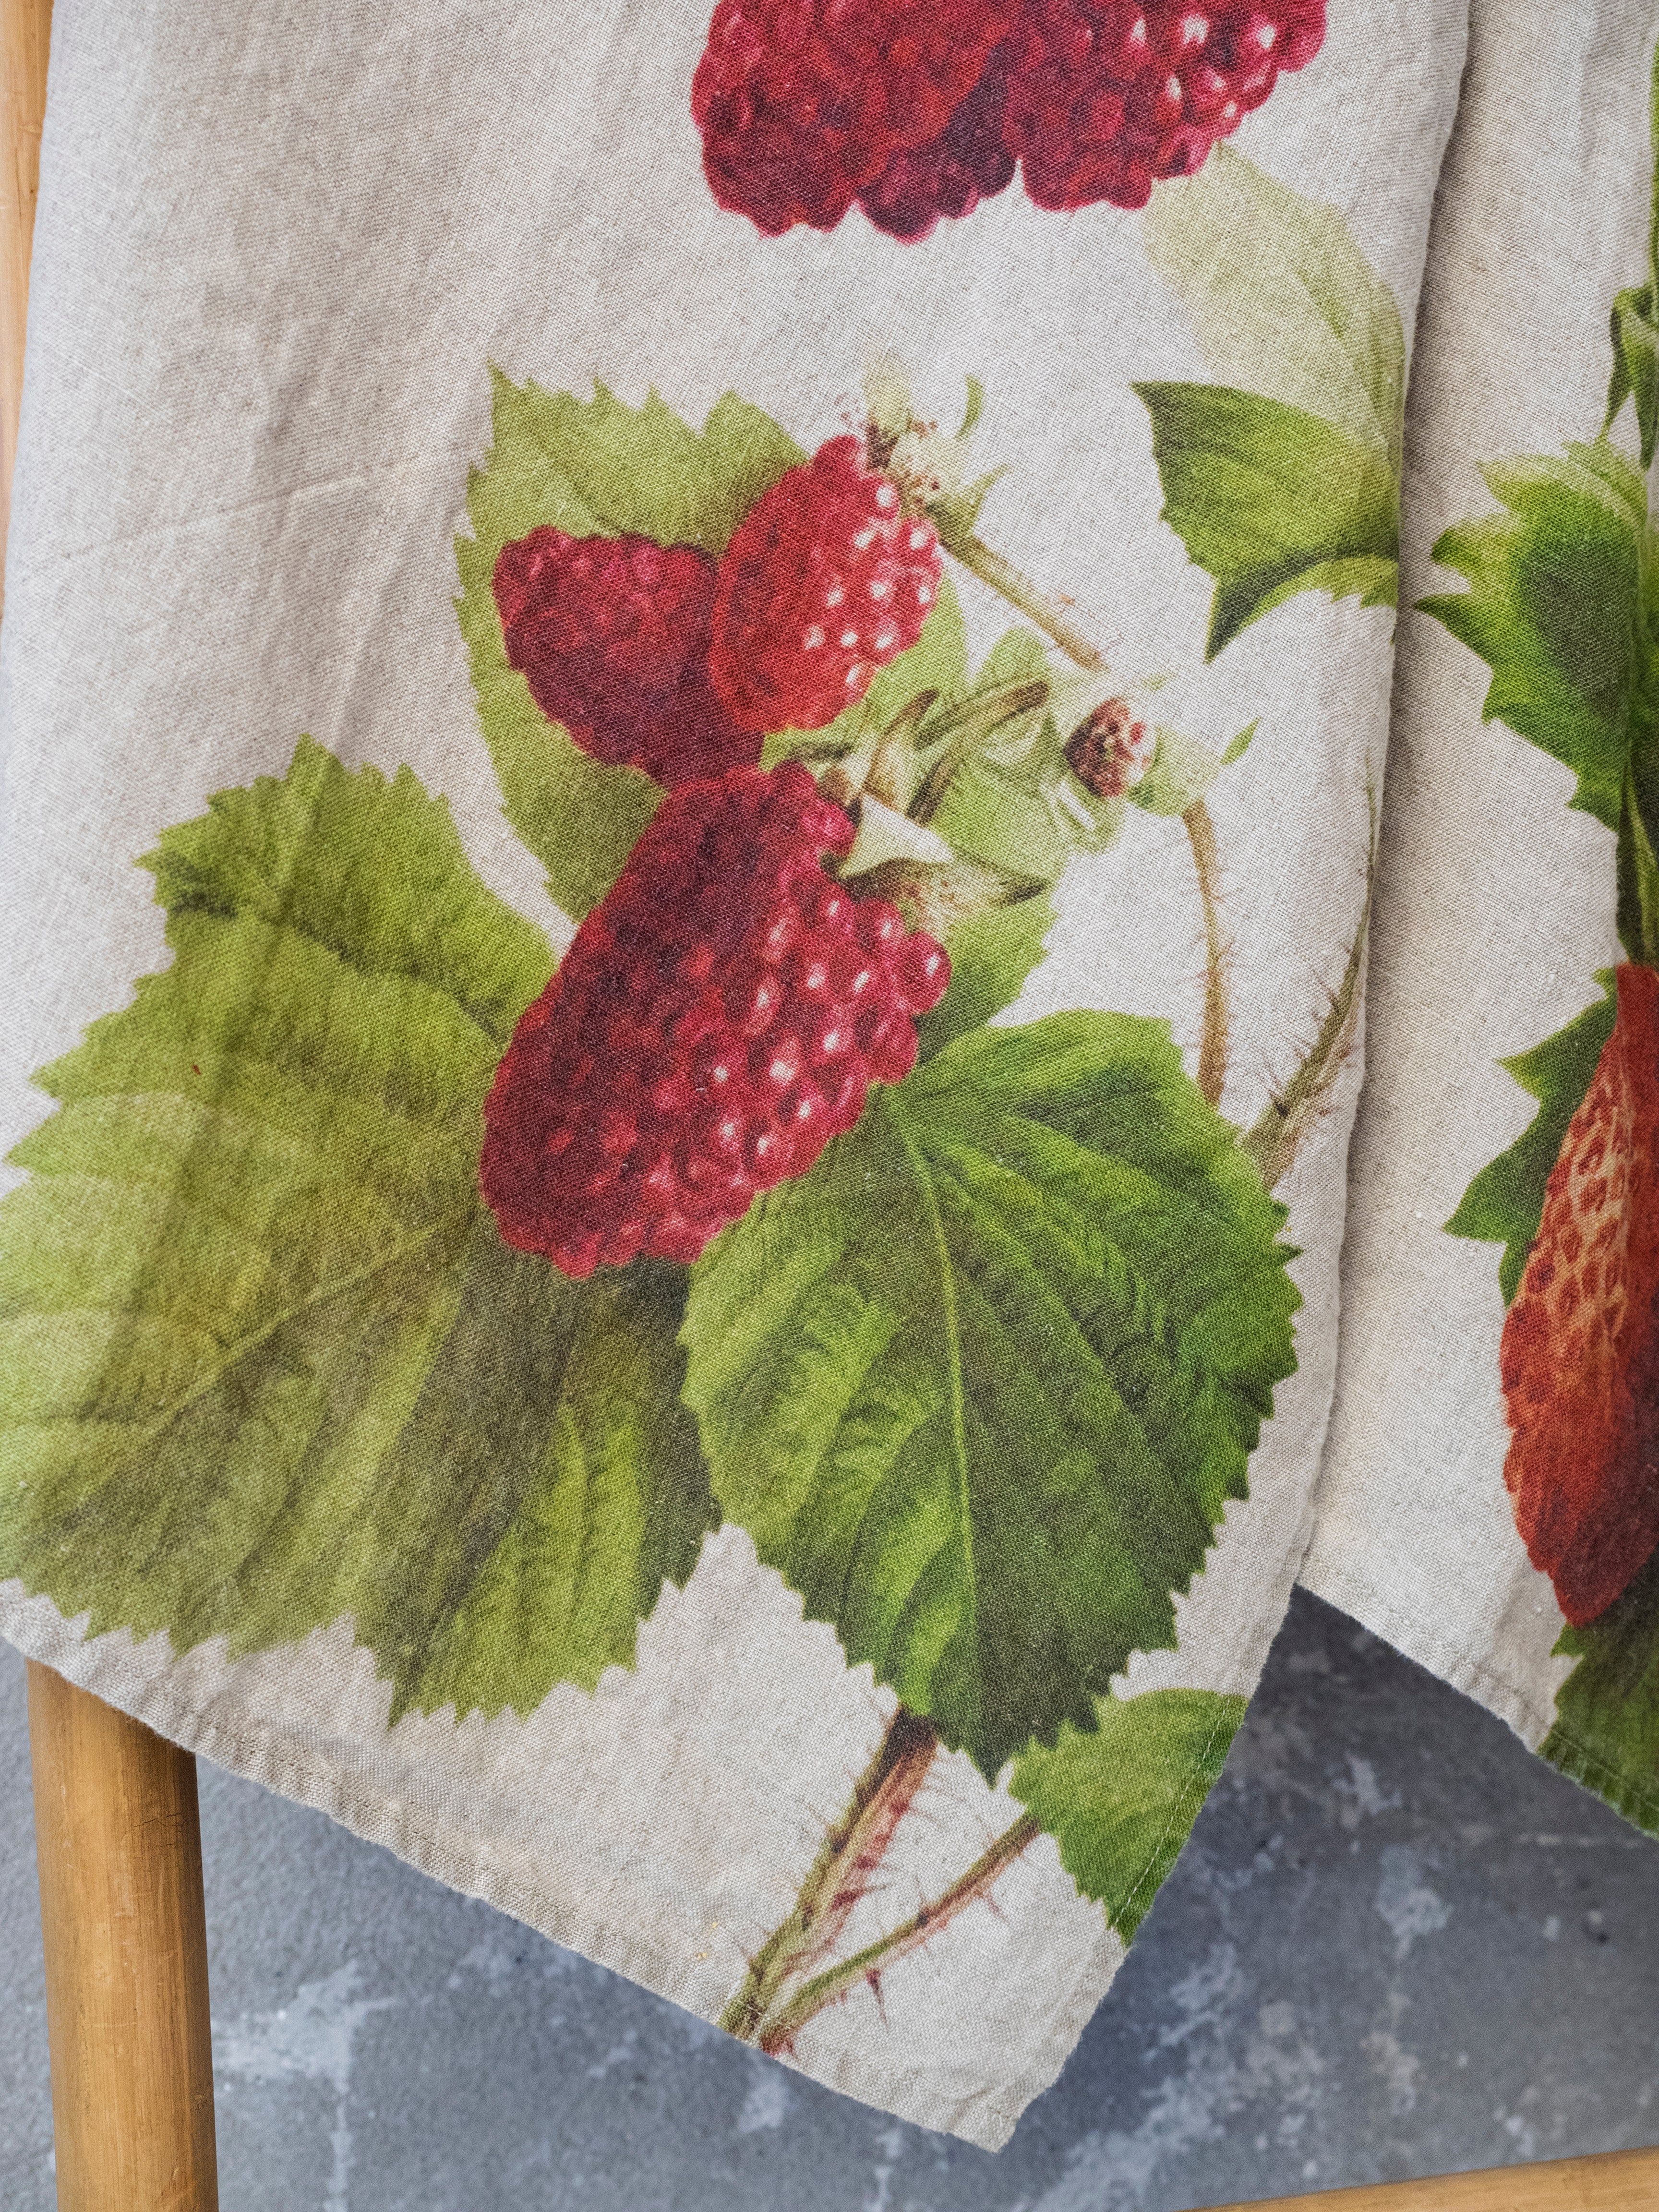 The Linoroom “Strawberry & Raspberry,” Pair of linen printed tea towels.